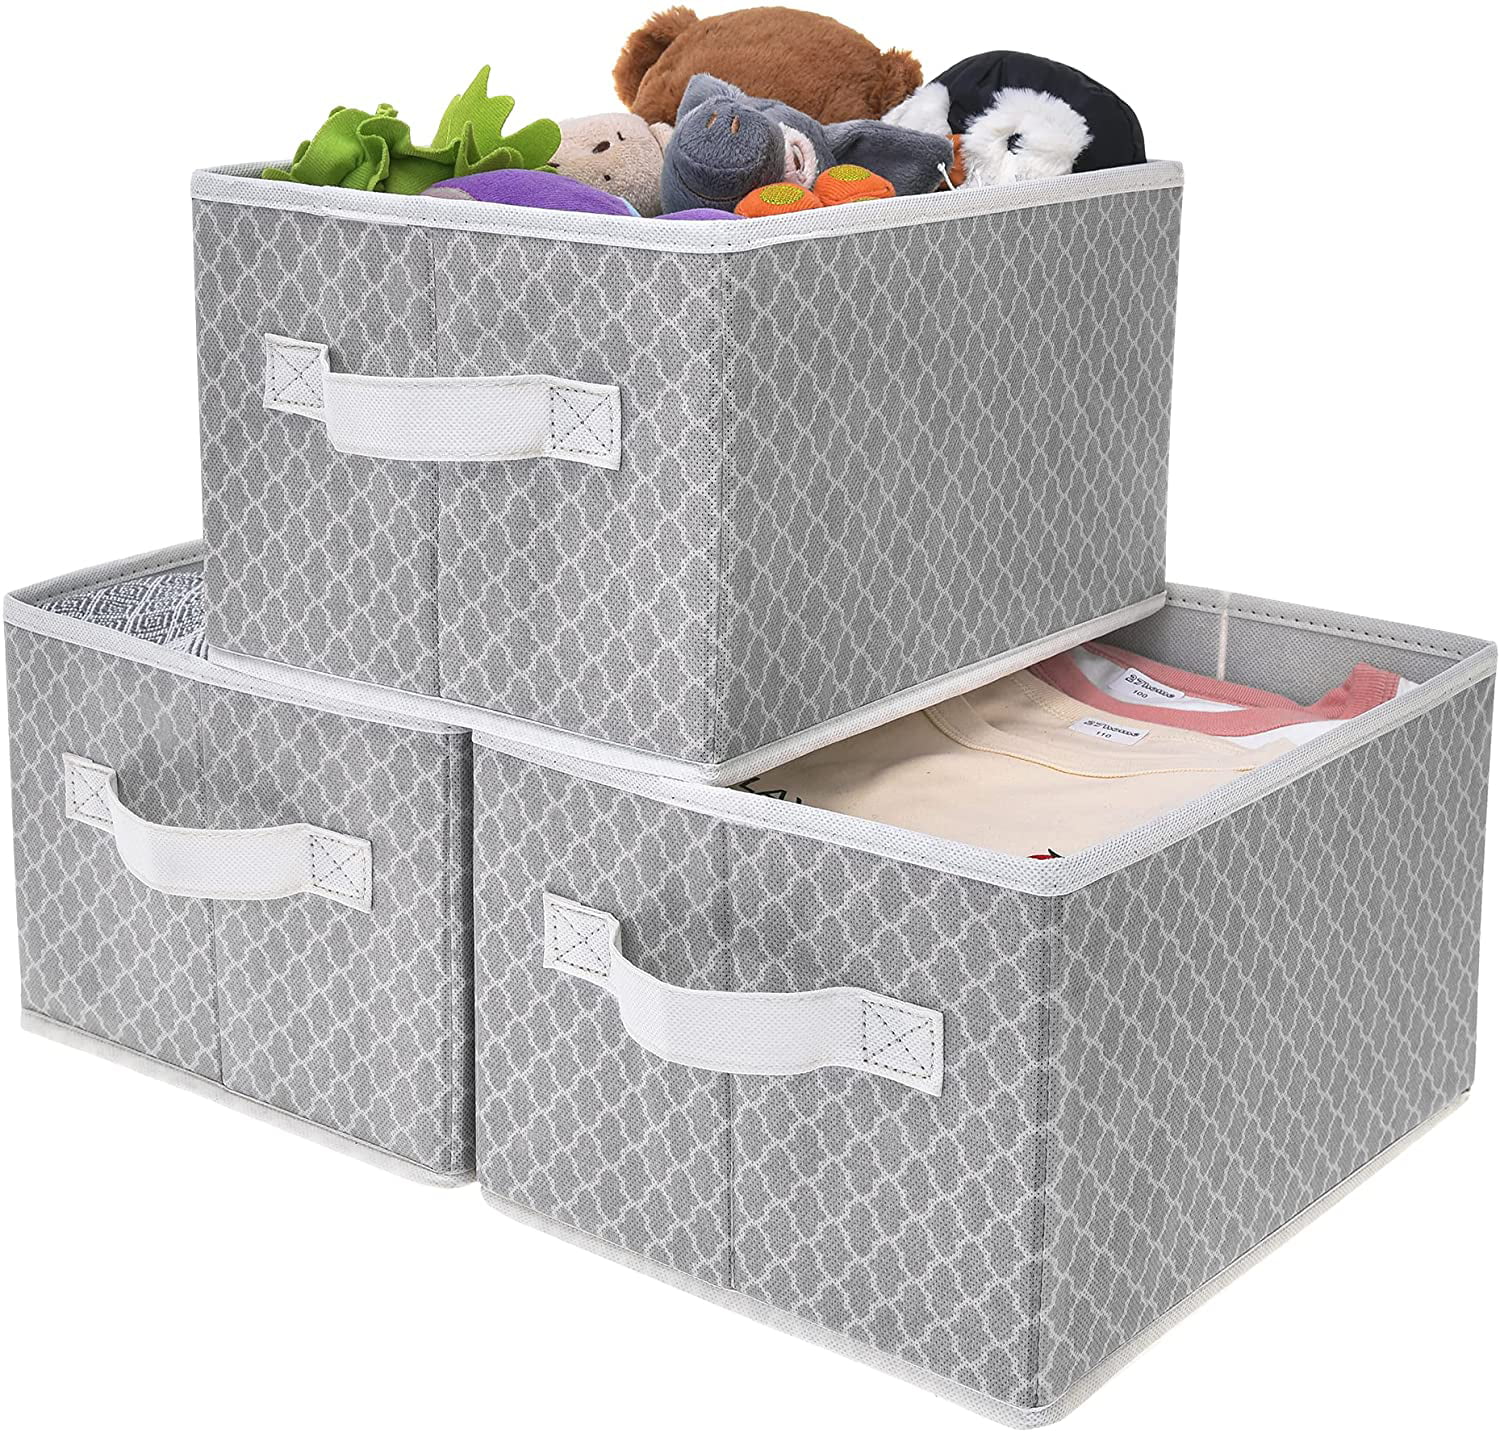 Toy Storage Basket Nursery Storage Containers with Lids Kids Storage Box Organizer Dark Gray and White Extra Large GRANNY SAYS Storage Bin with Lid 3-Pack 